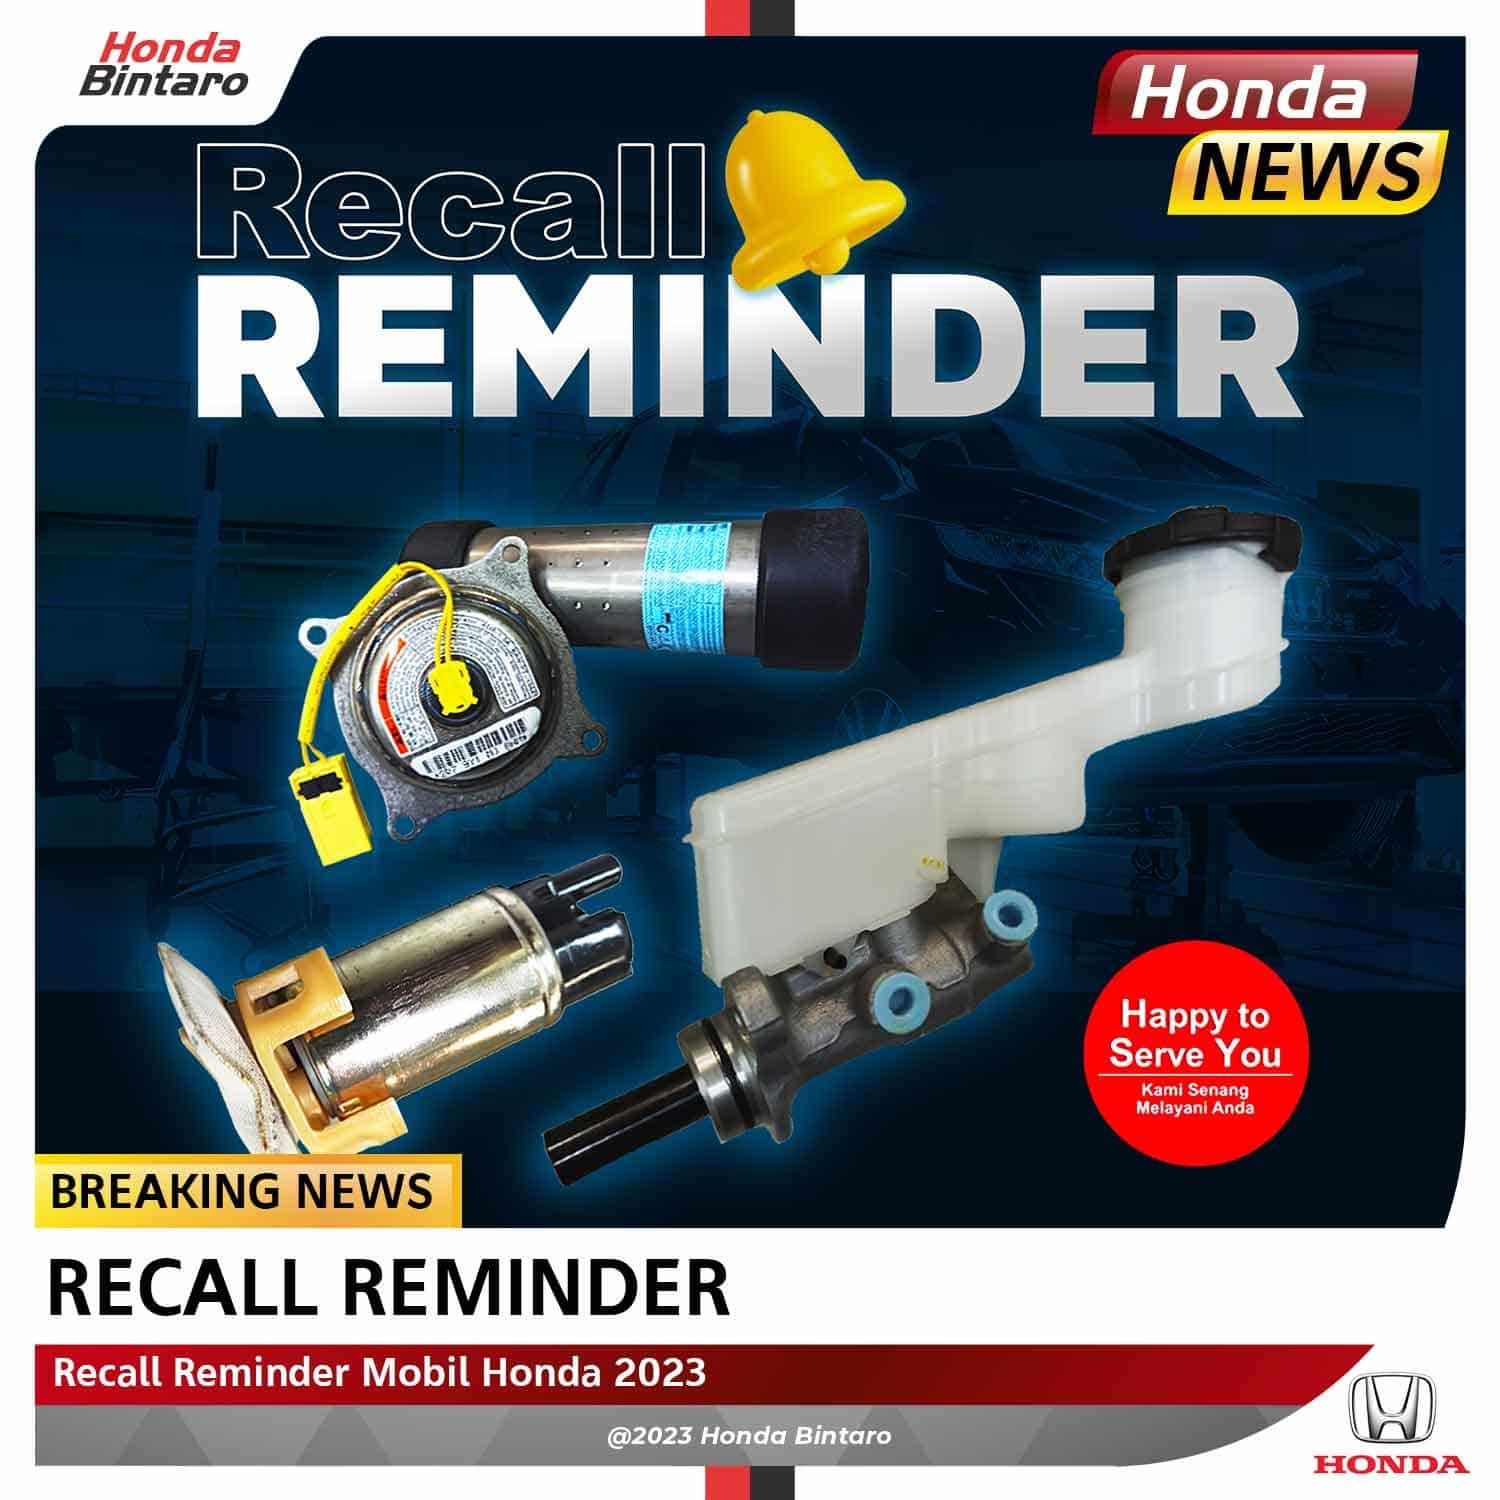 Recall Reminder Mobil Honda 2023